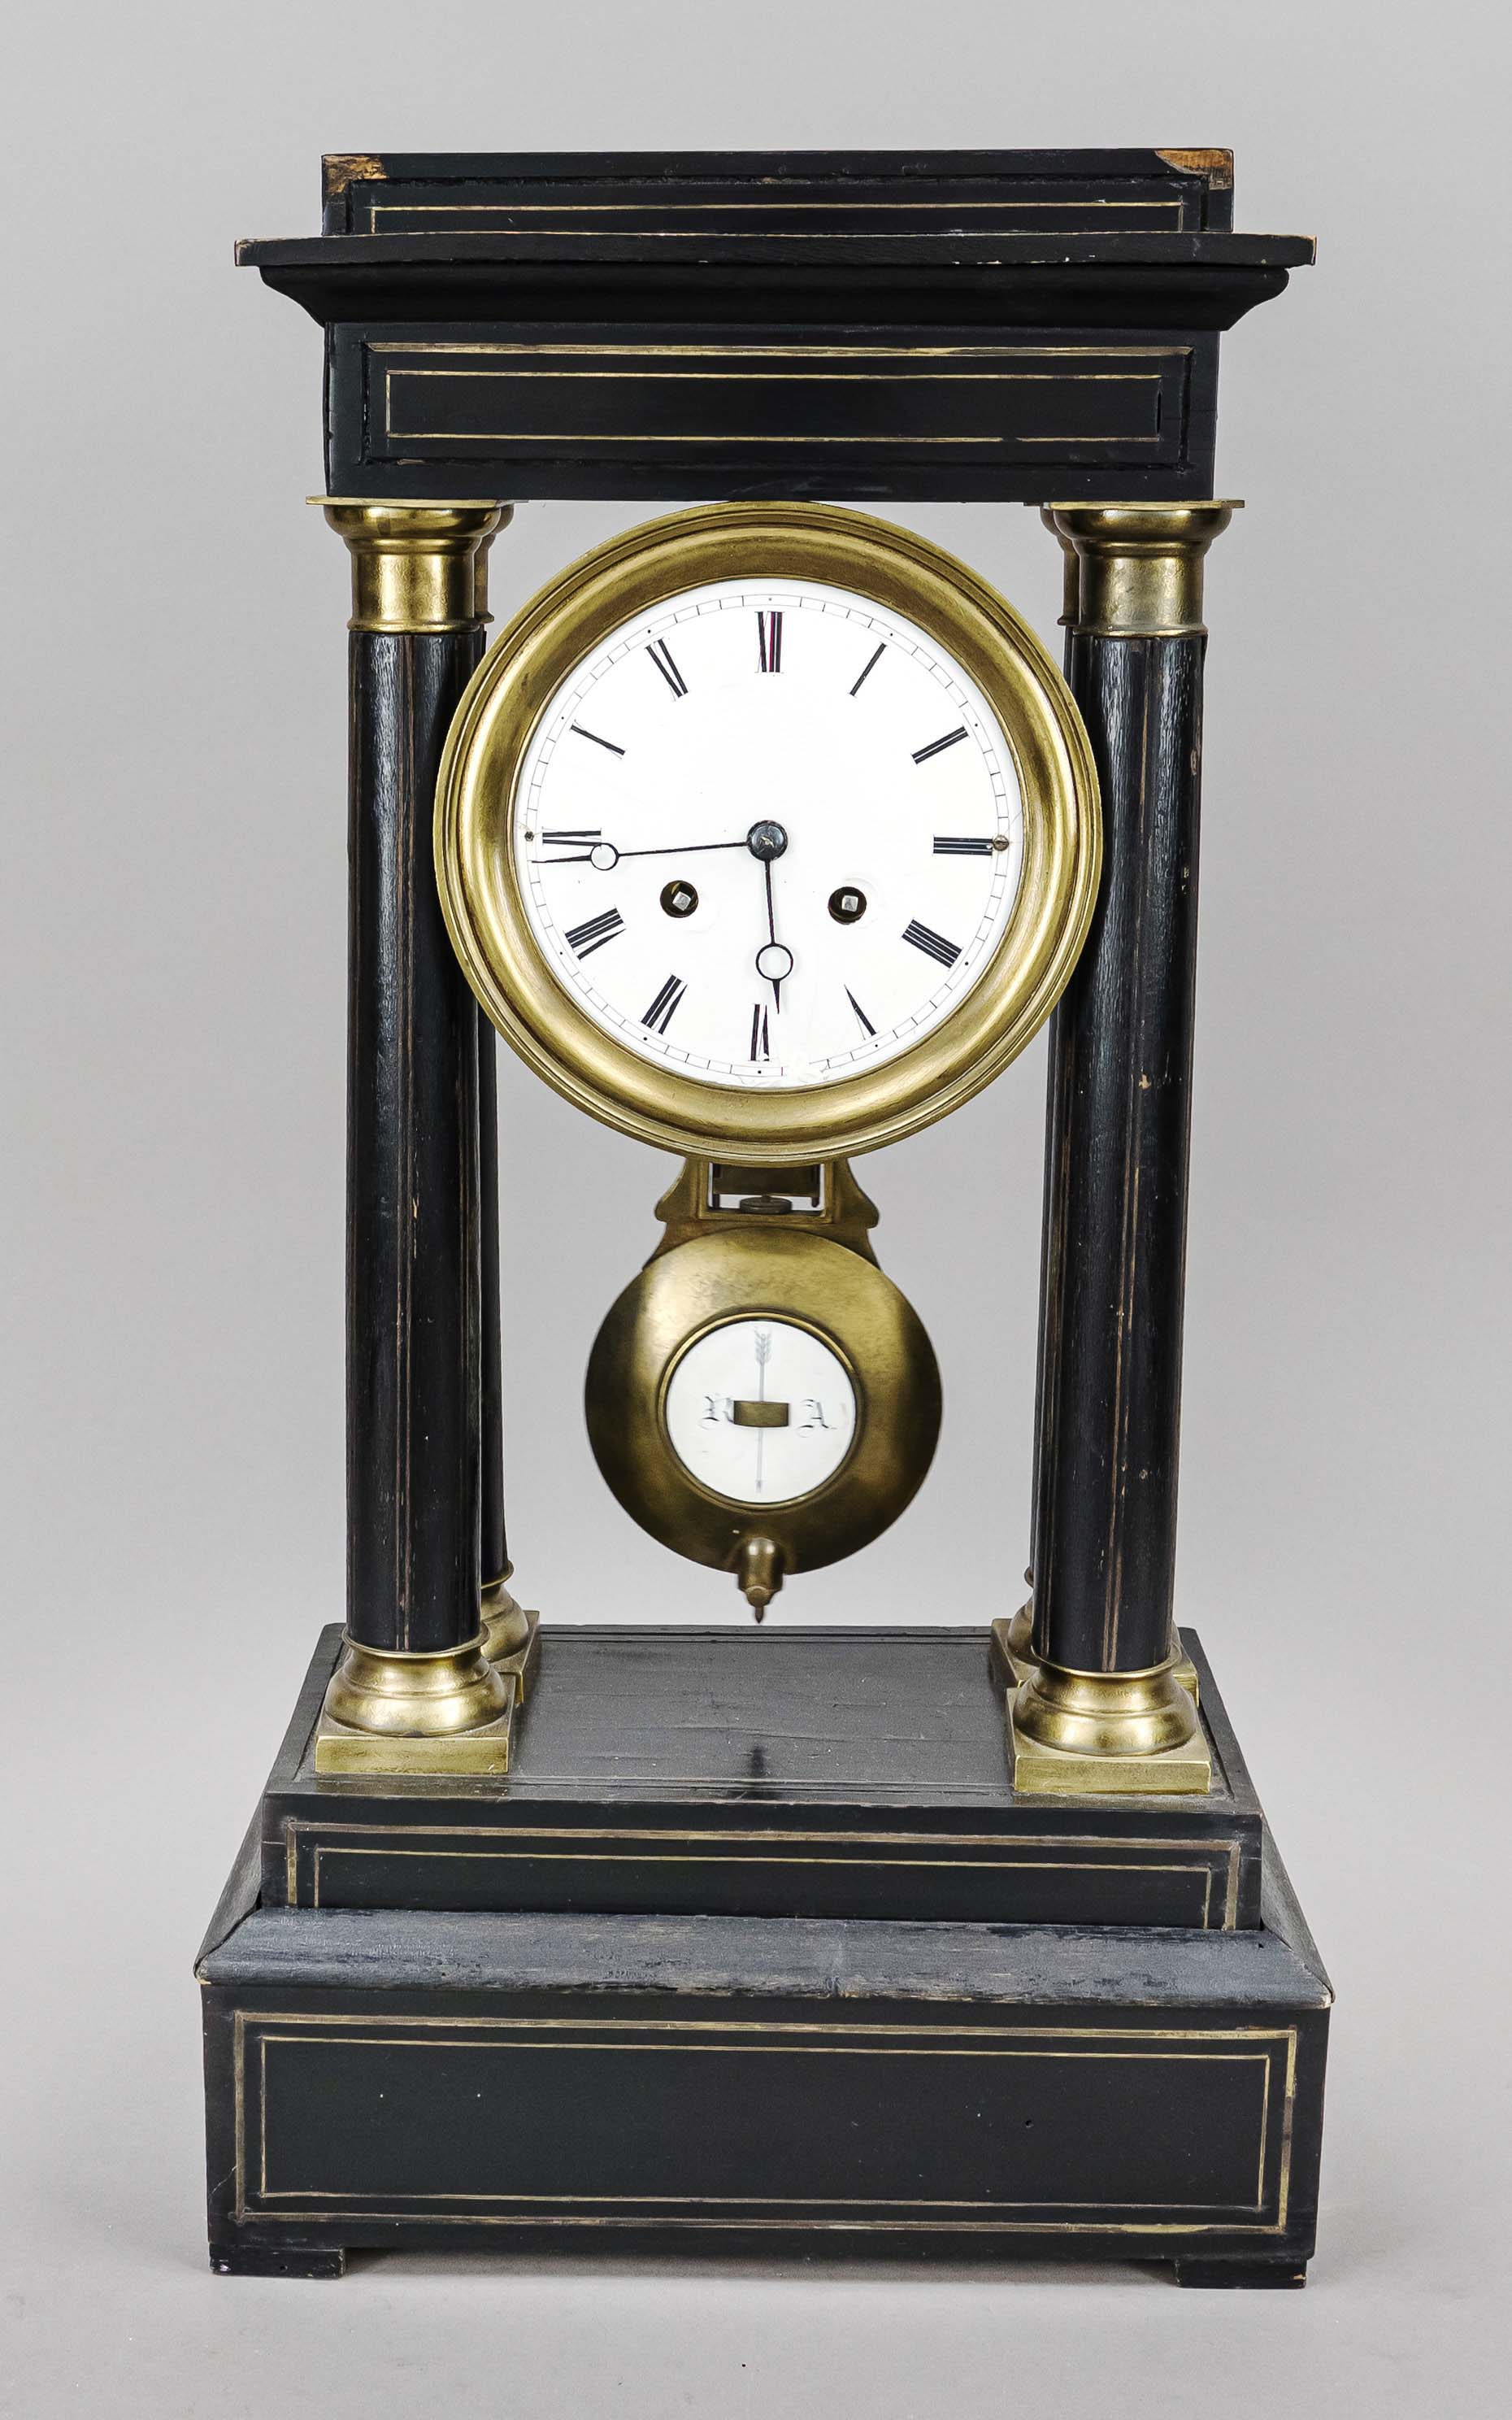 Portalu clock, 2nd half 19th century, ebonized wood with brass thread inlays in the head and base,